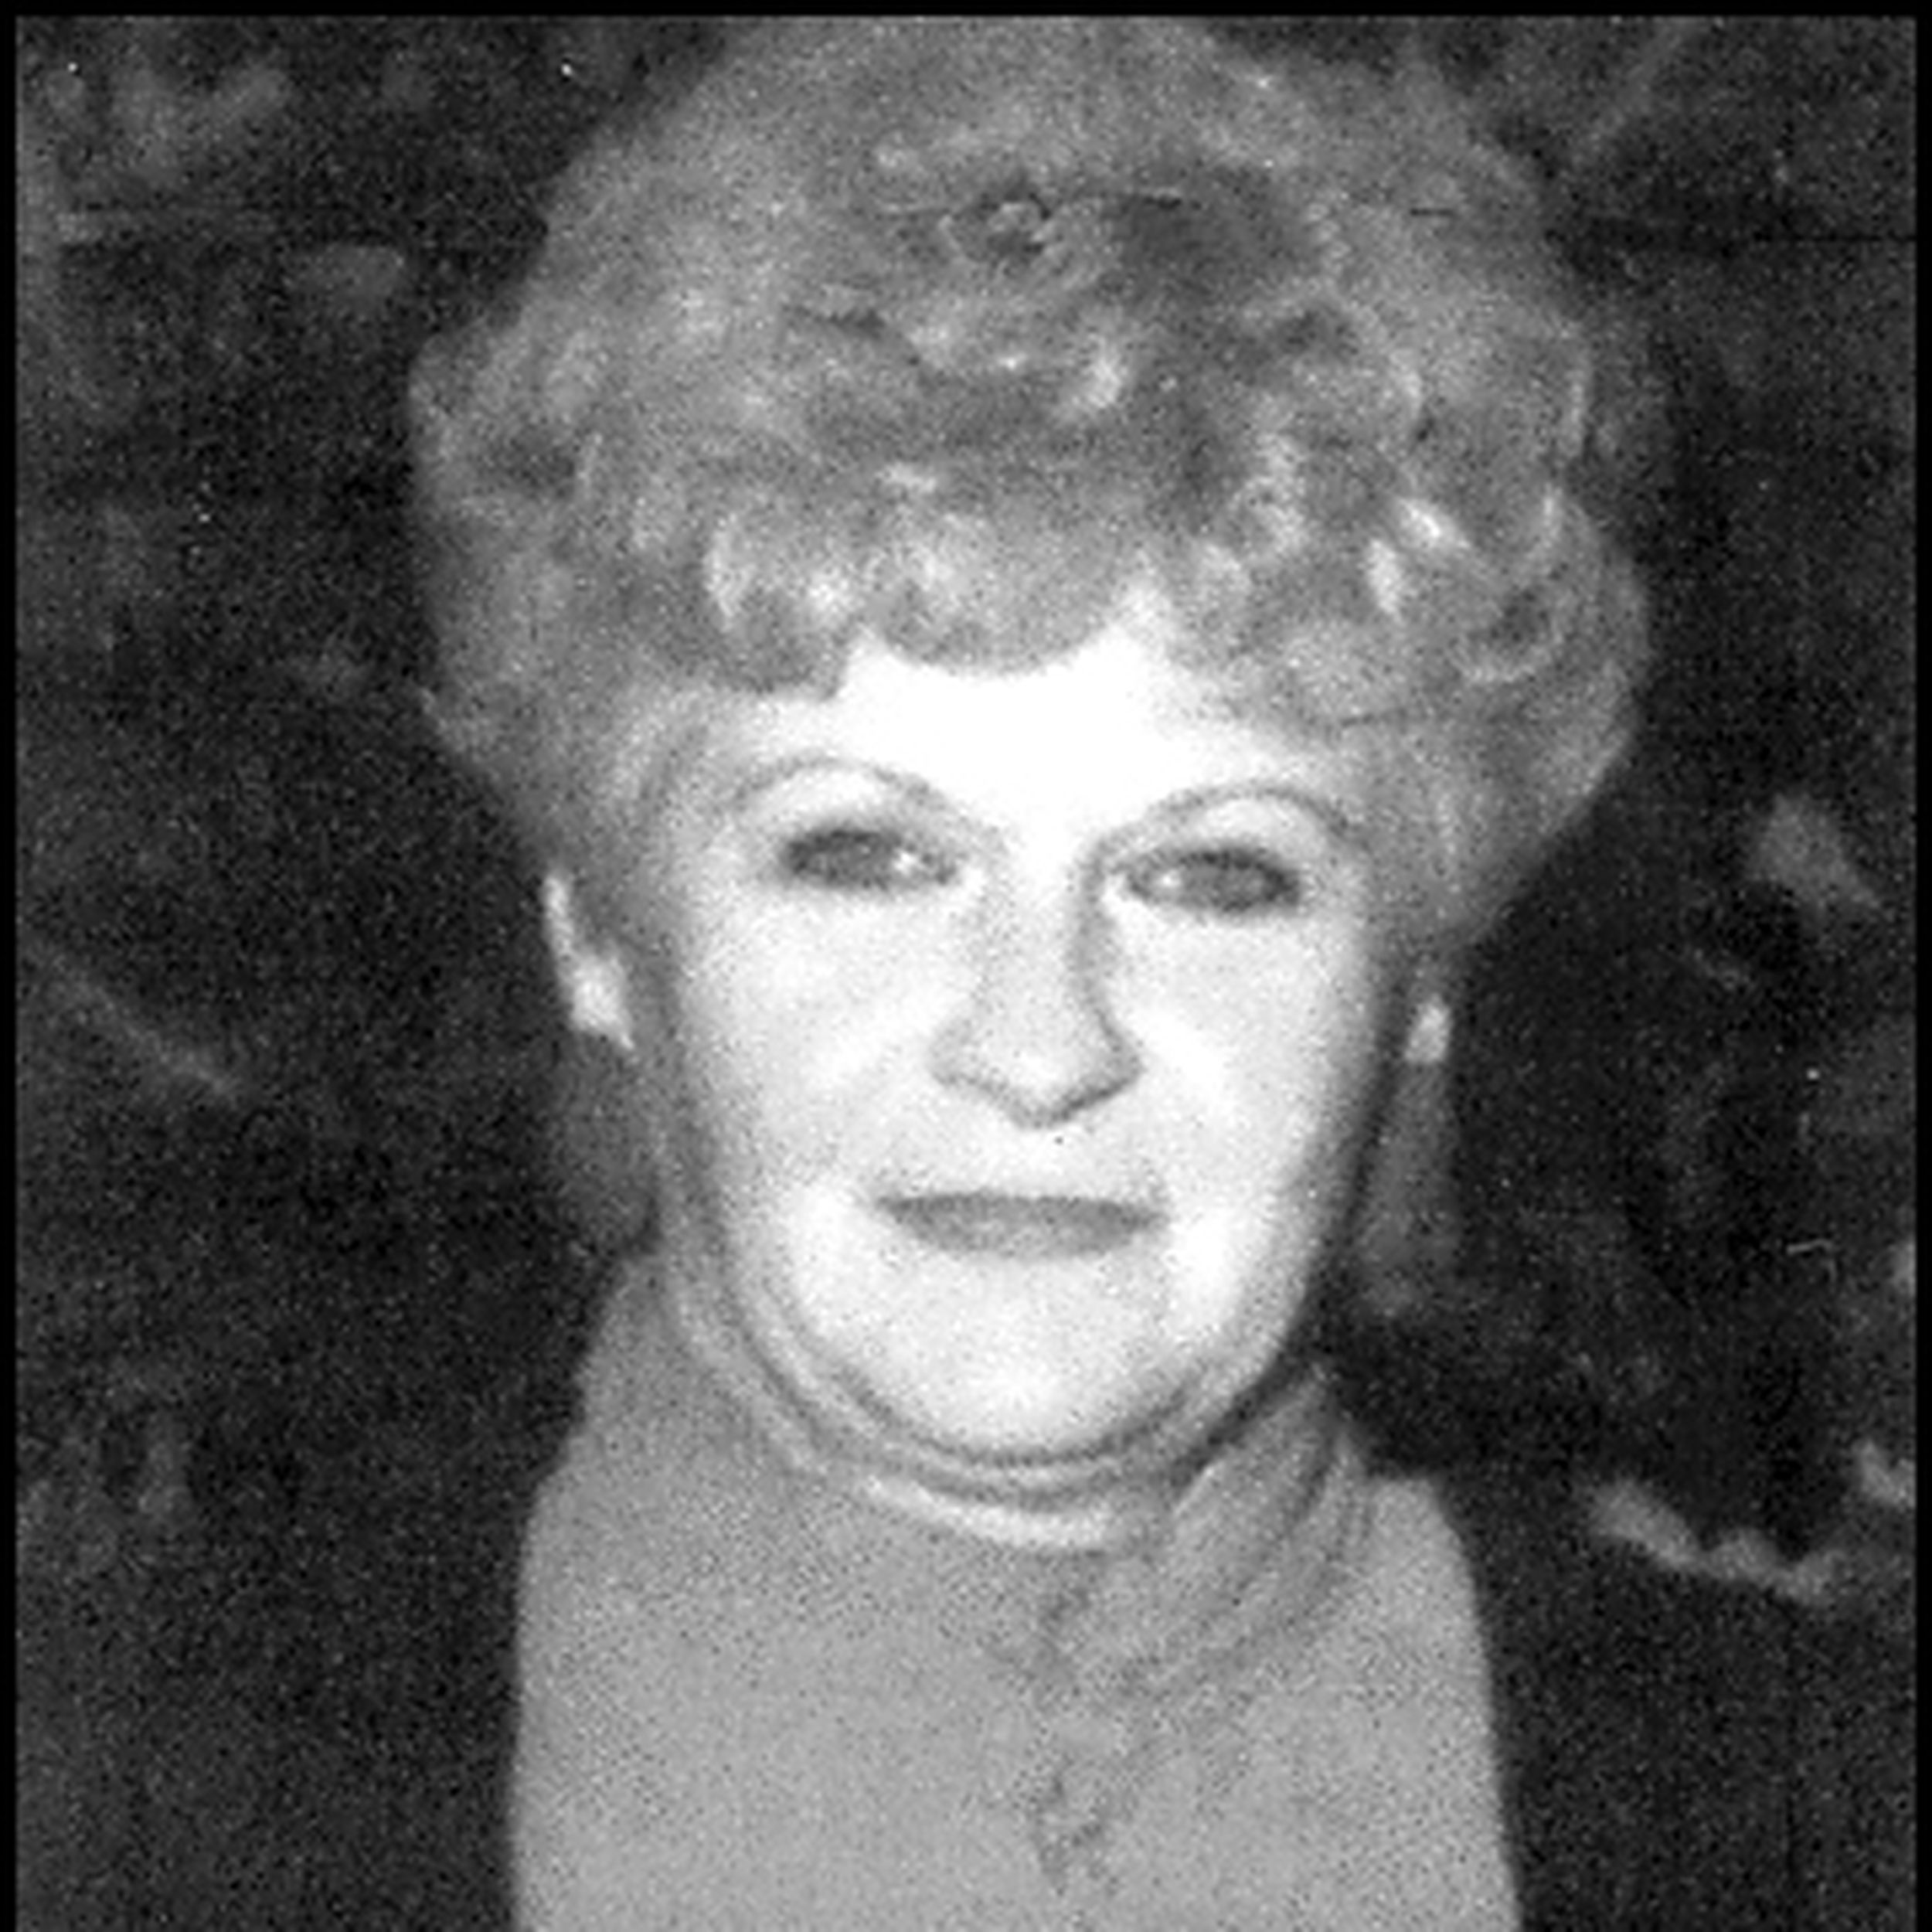 Obituary: Dupuis, Margie Davis